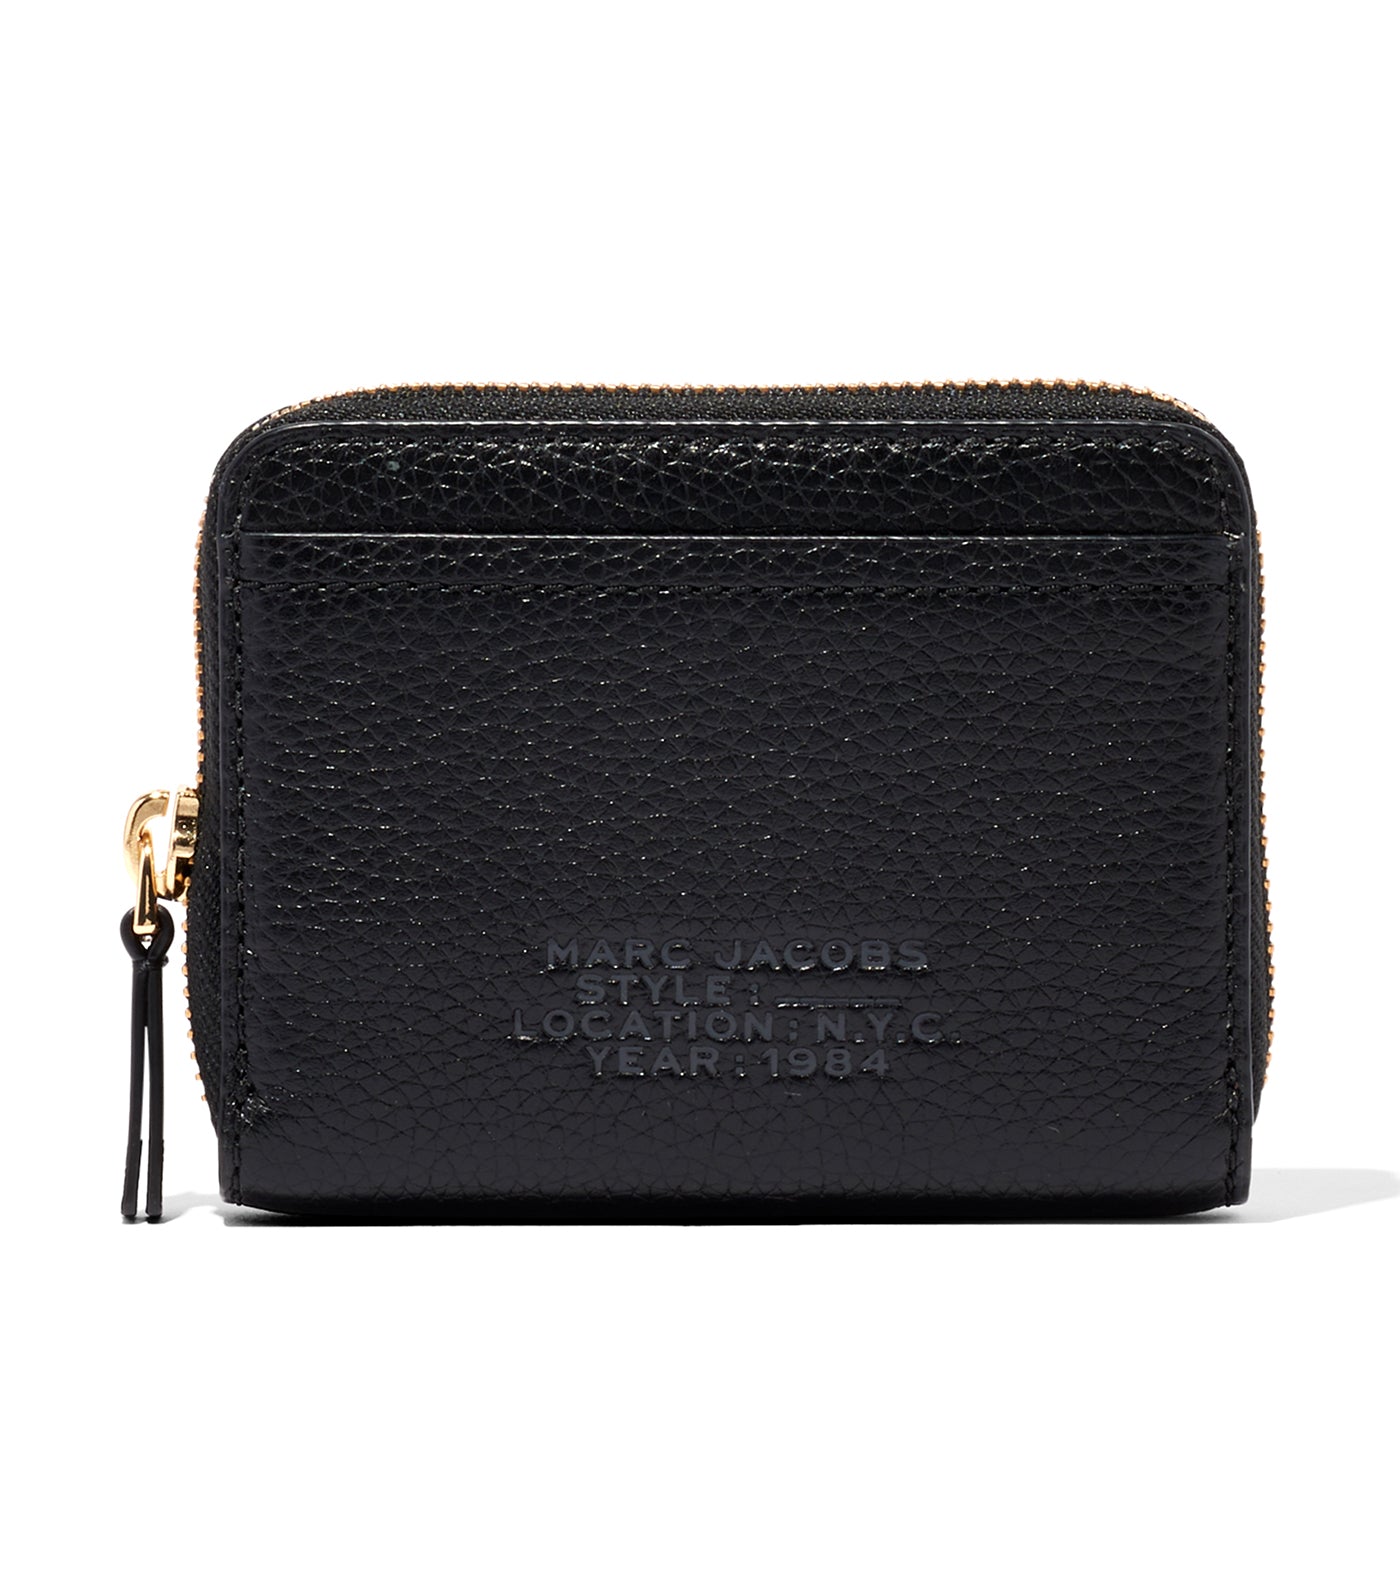 The Leather Zip Around Wallet Black